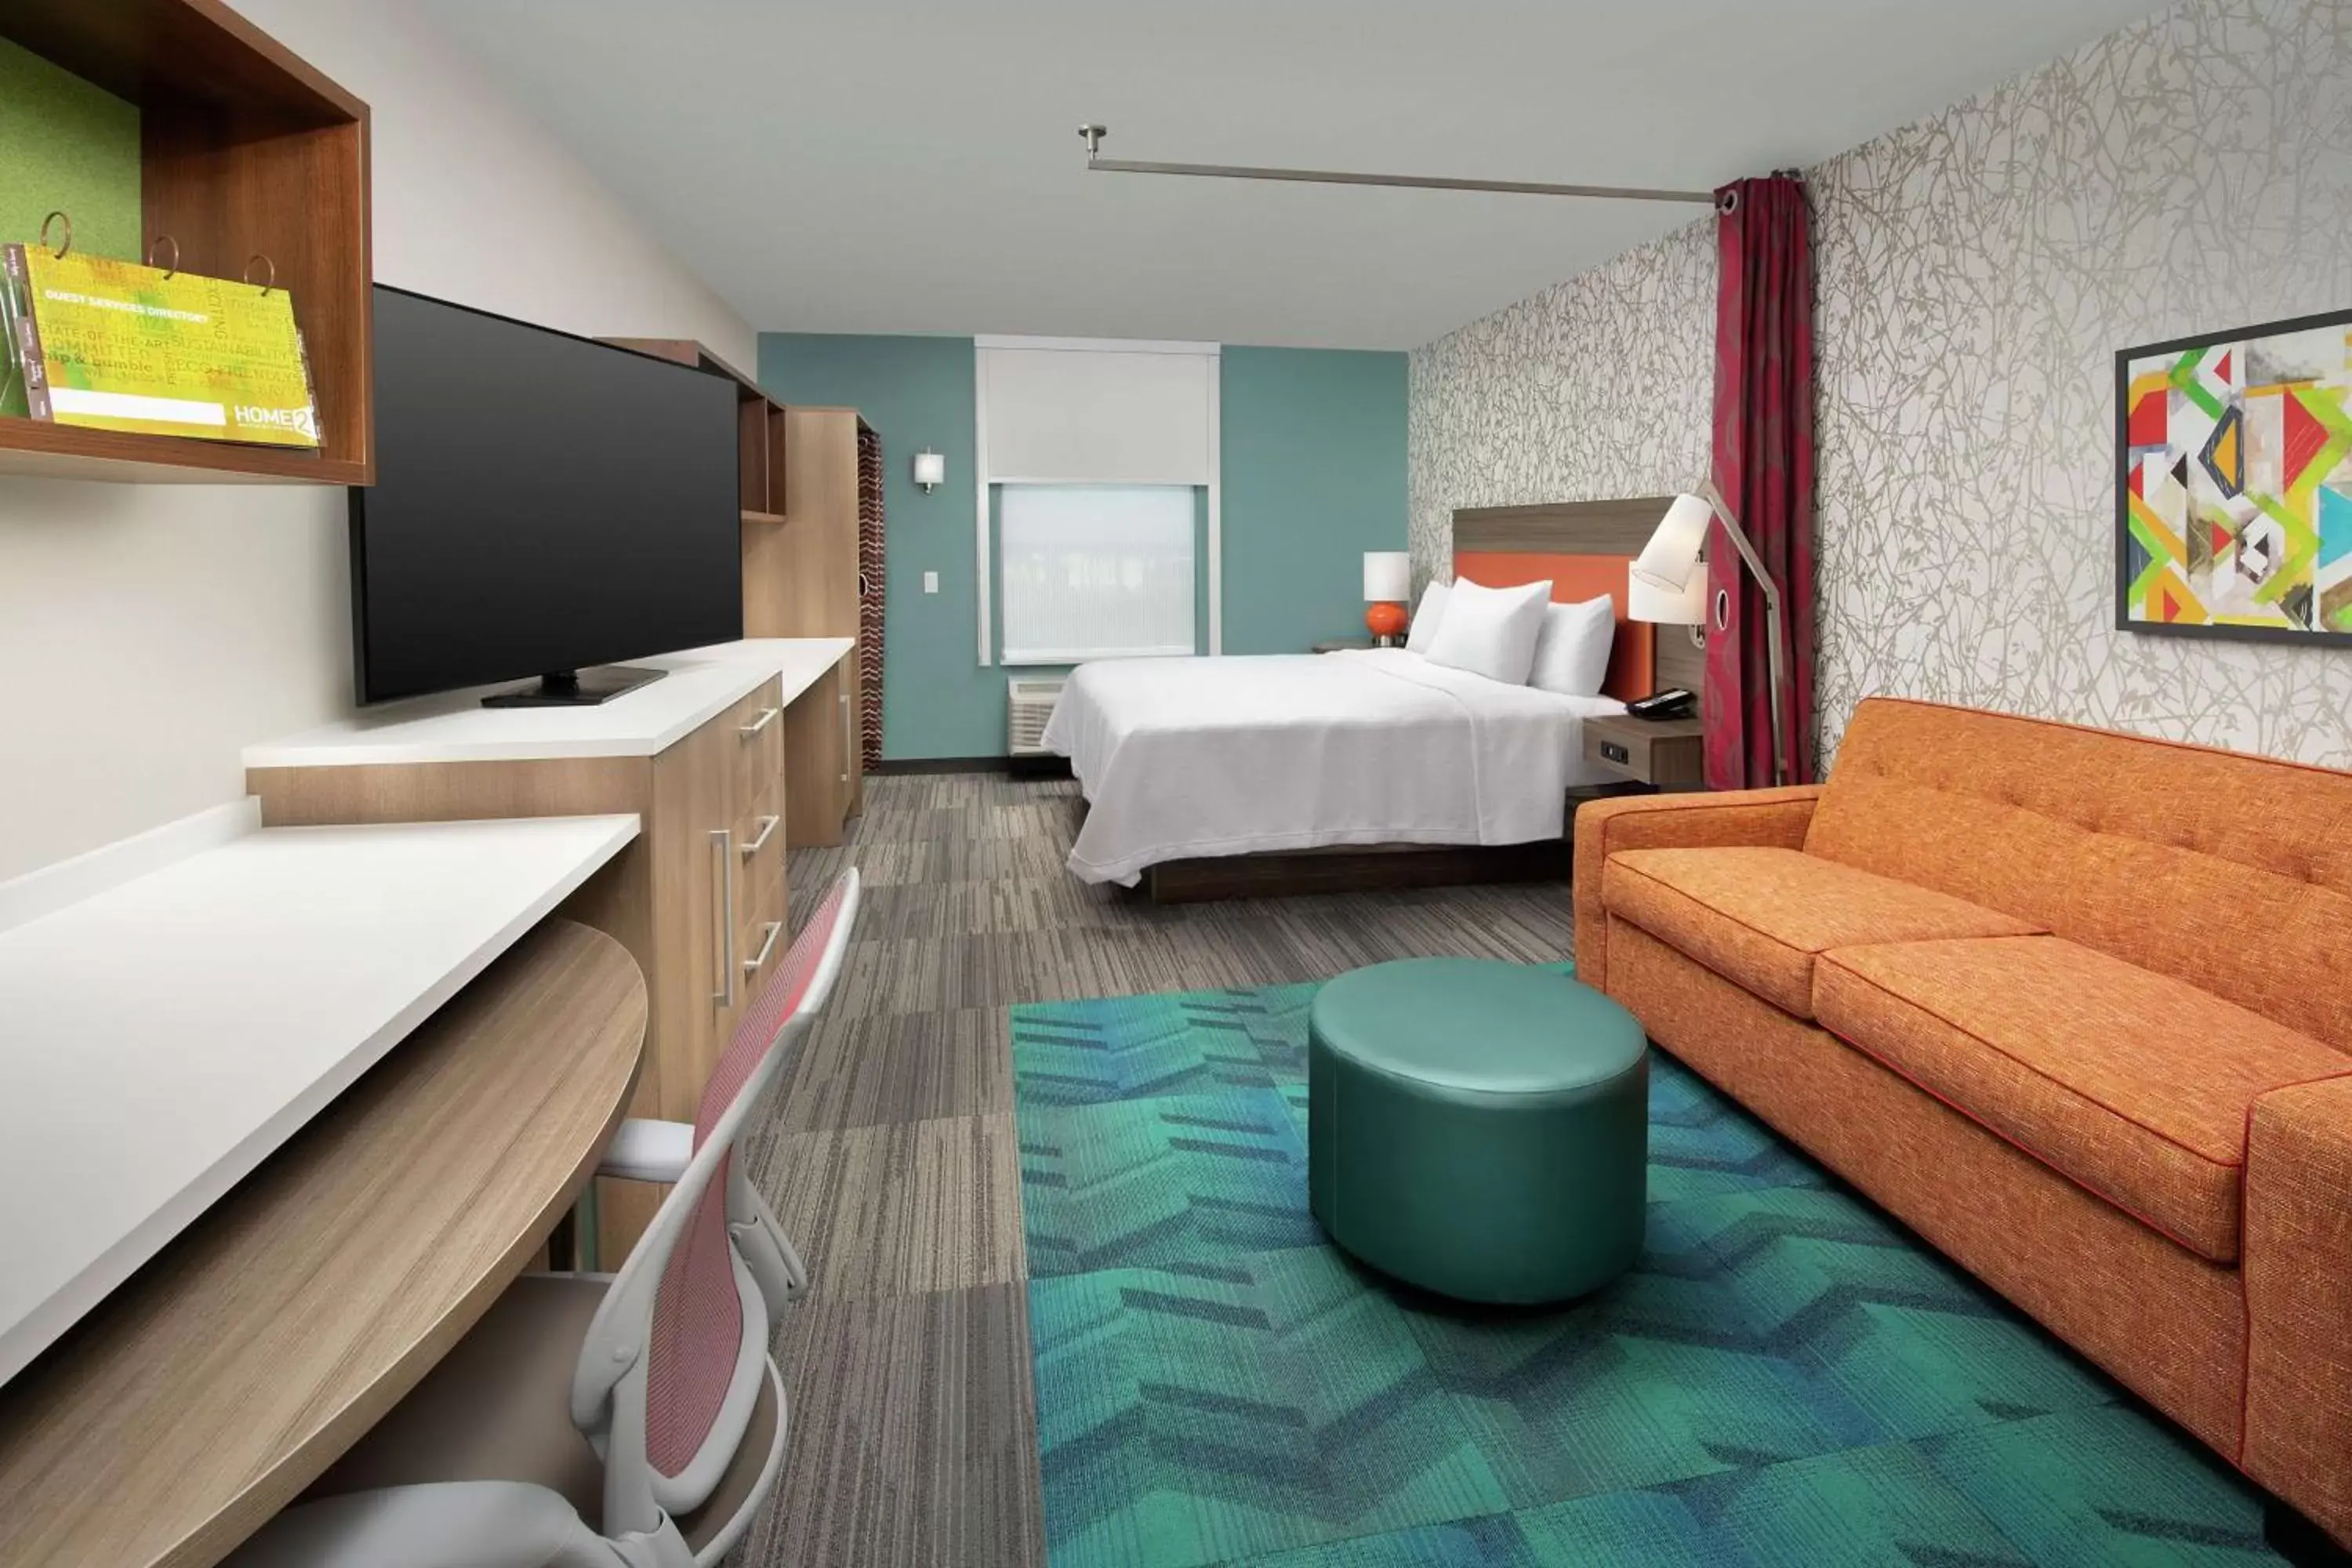 Bedroom, TV/Entertainment Center in Home2 Suites by Hilton San Antonio Lackland SeaWorld